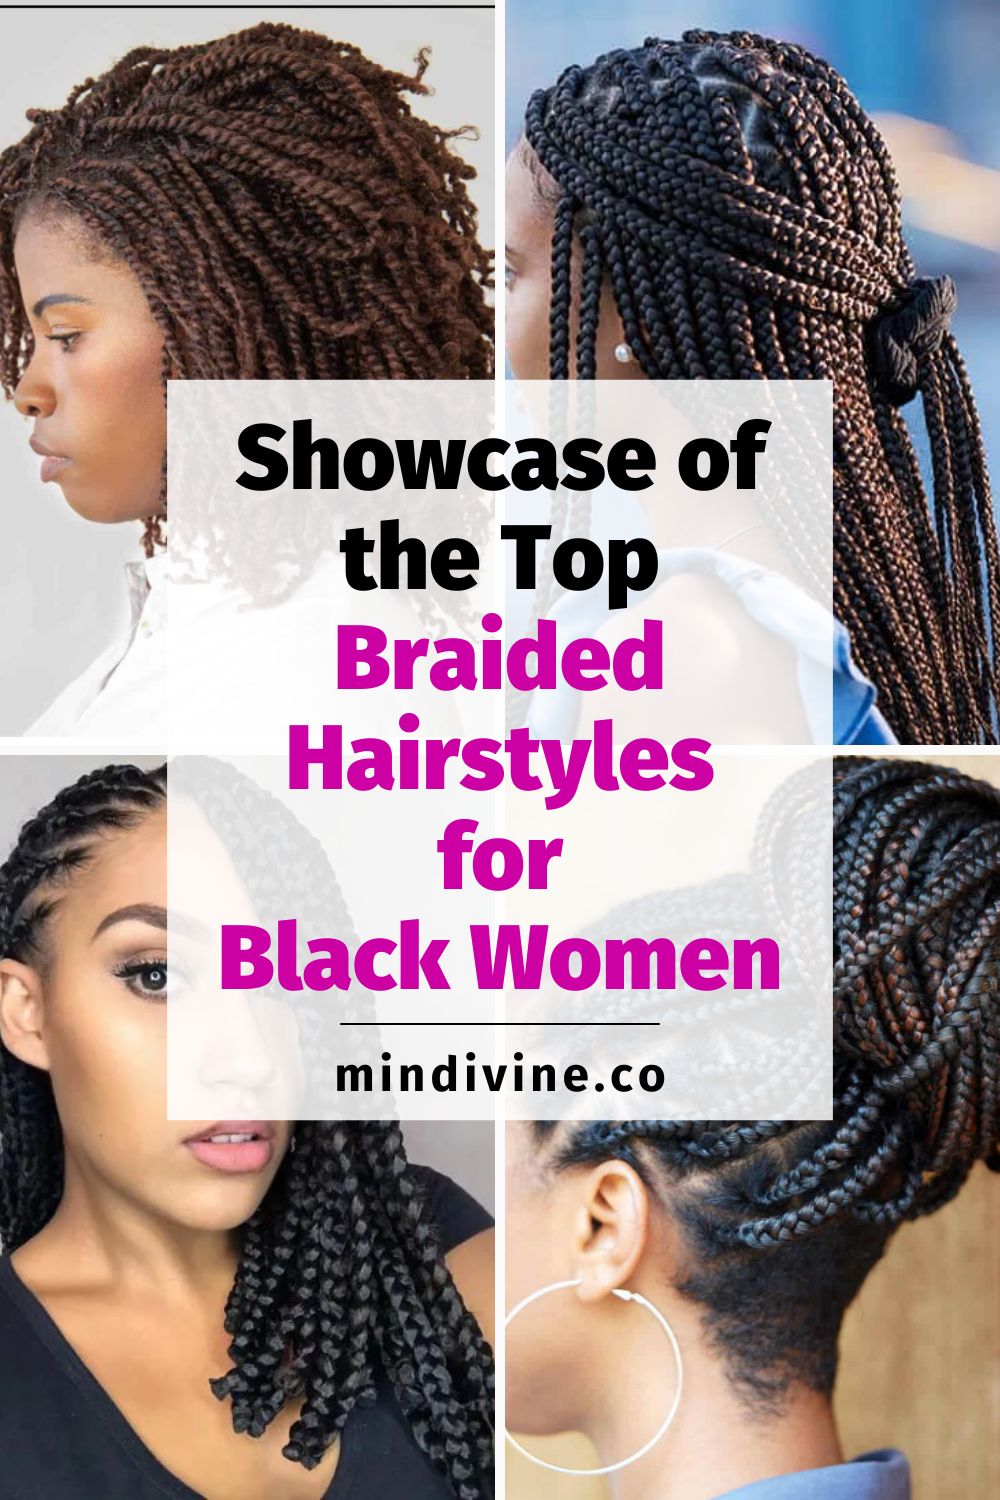 4 stylish braided hairstyles for Black women